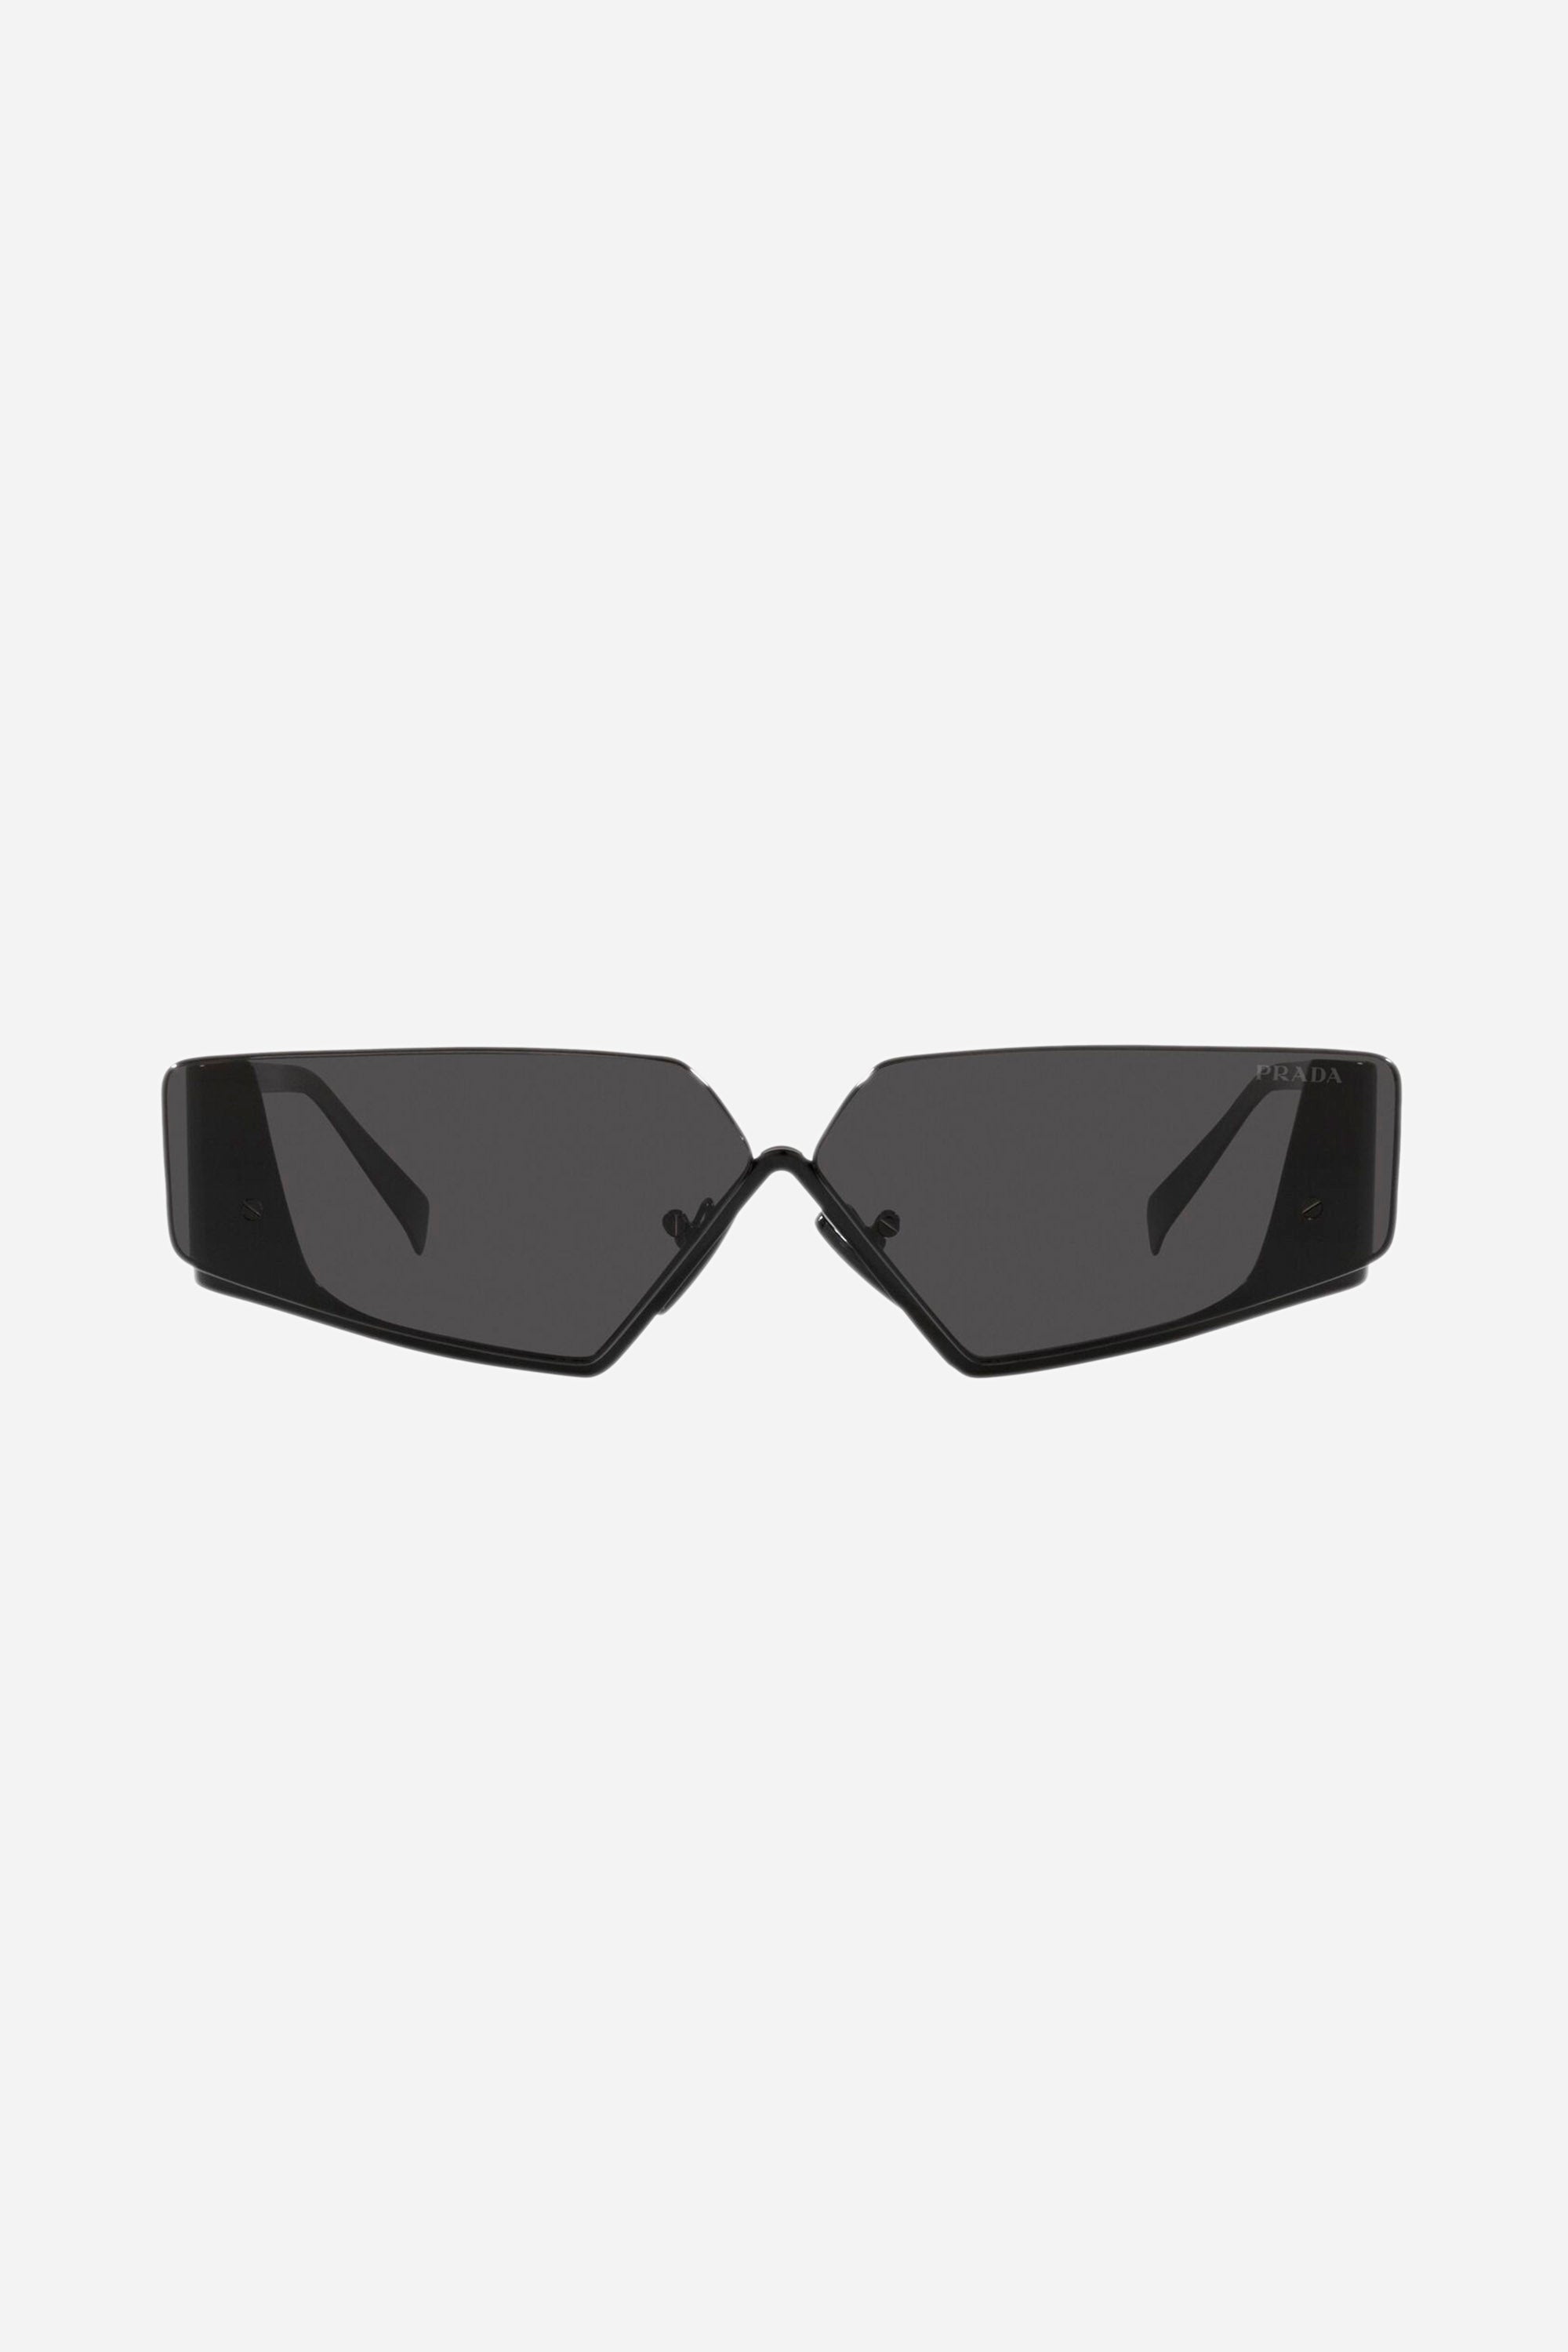 Prada flat top black sunglasses man Catwalk - Eyewear Club